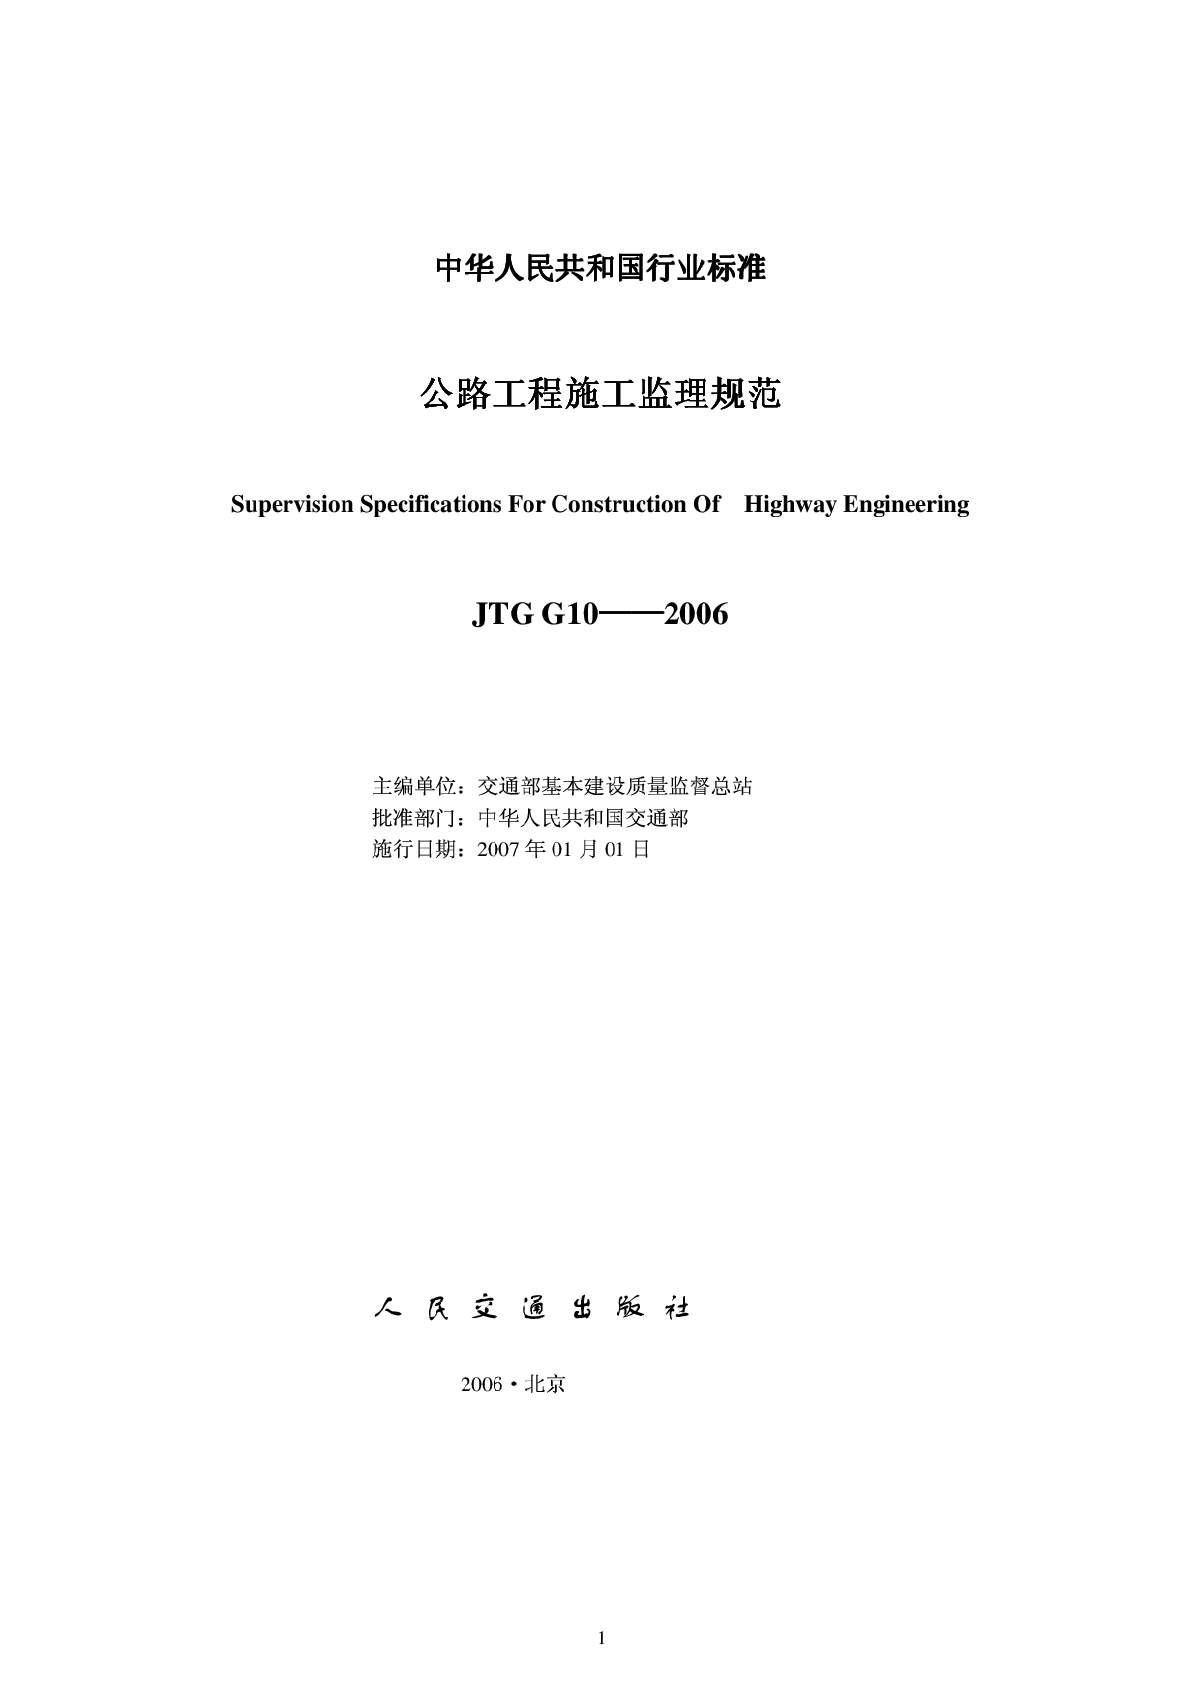 JTG G10-2006公路工程施工监理规范-图二